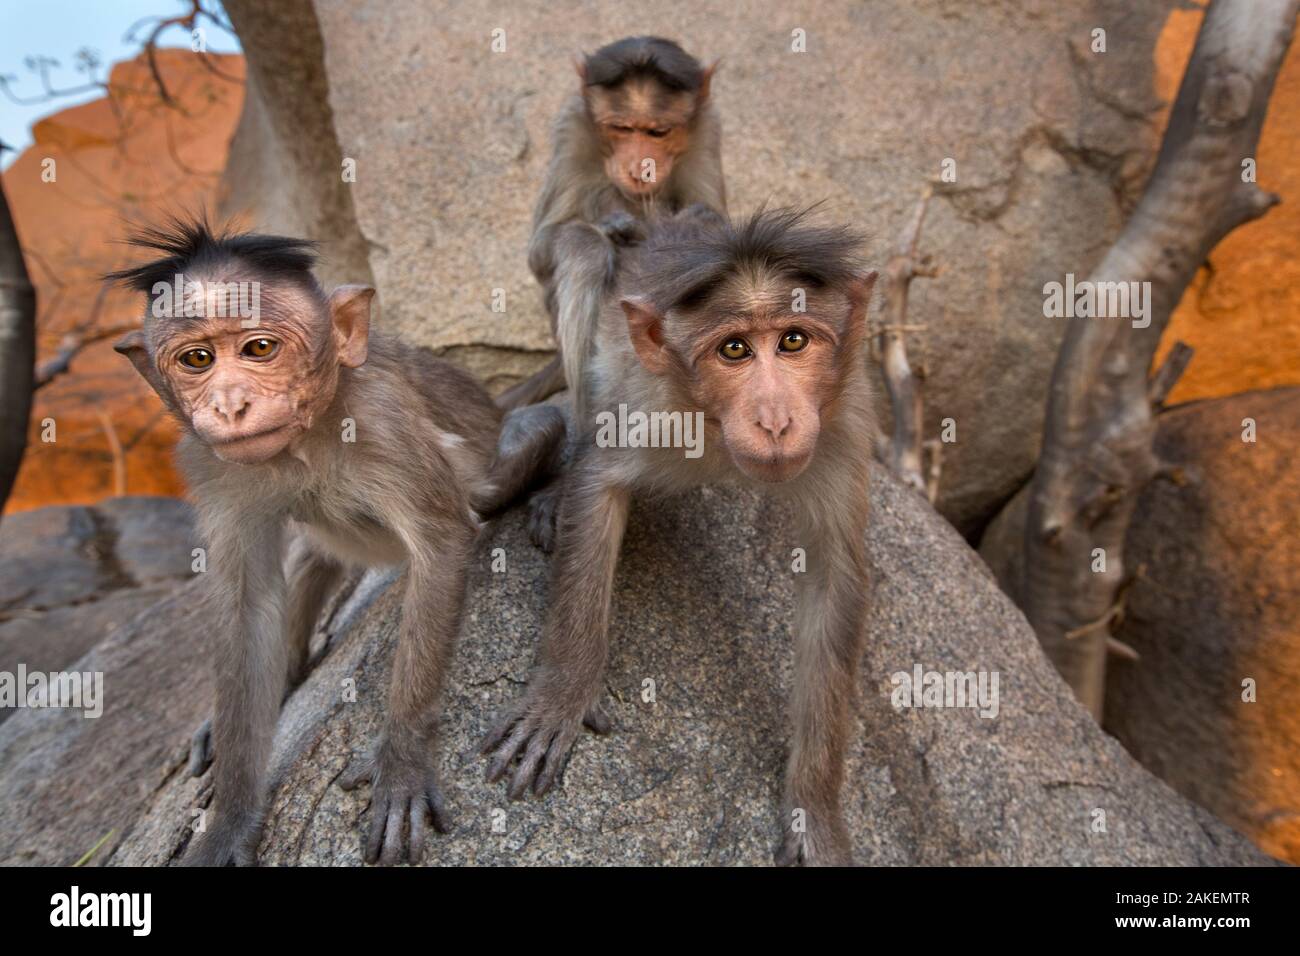 Bonnet macaque (Macaca radiata) regardant avec curiosité . Hampi, Karnataka, Inde. Banque D'Images